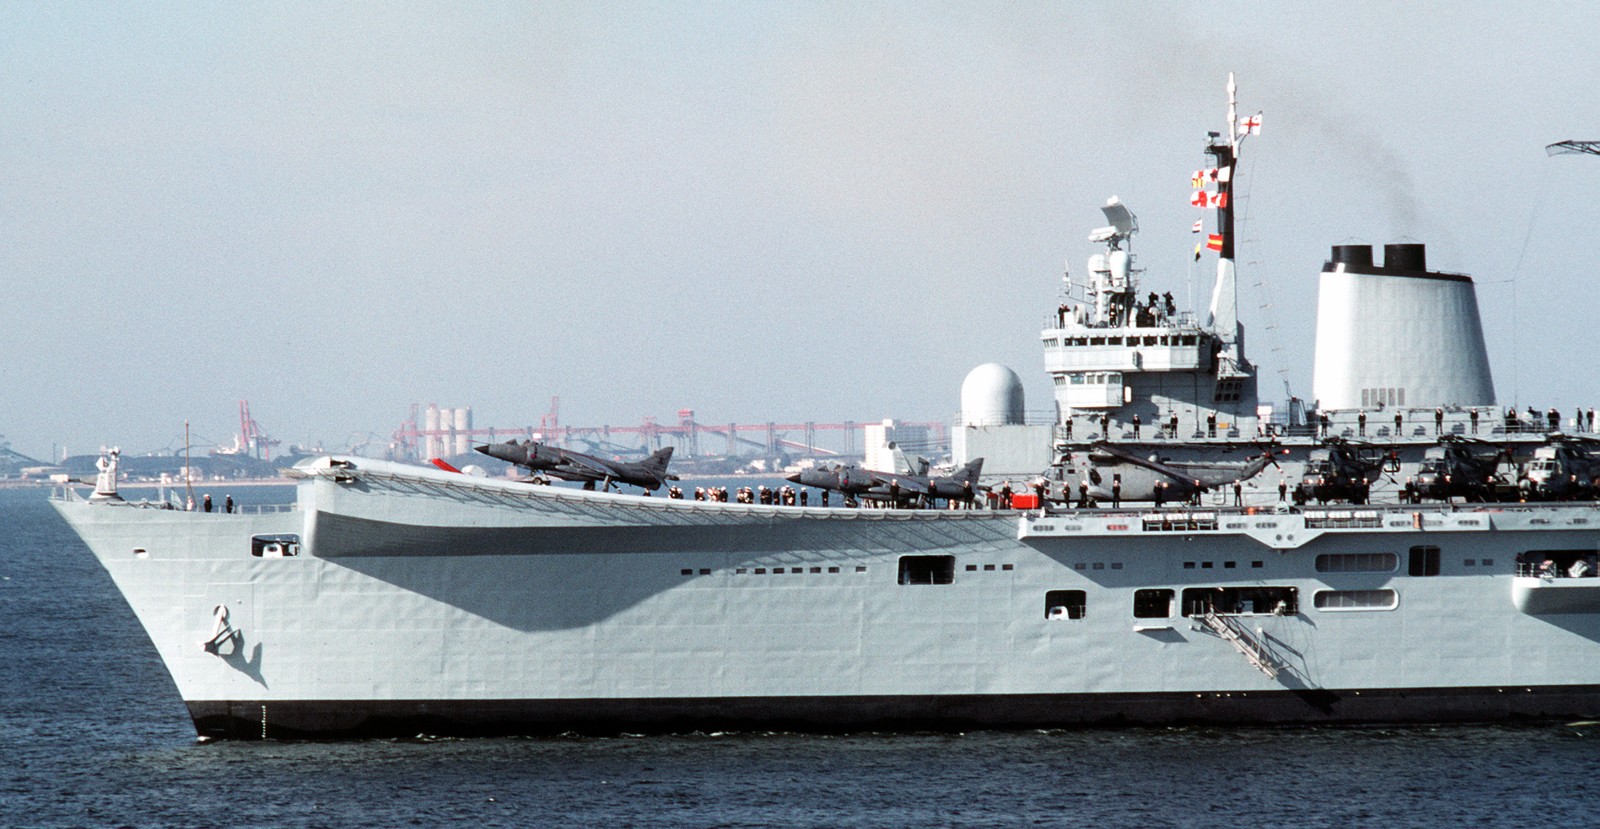 r-05 hms invincible class aircraft carrier royal navy 12